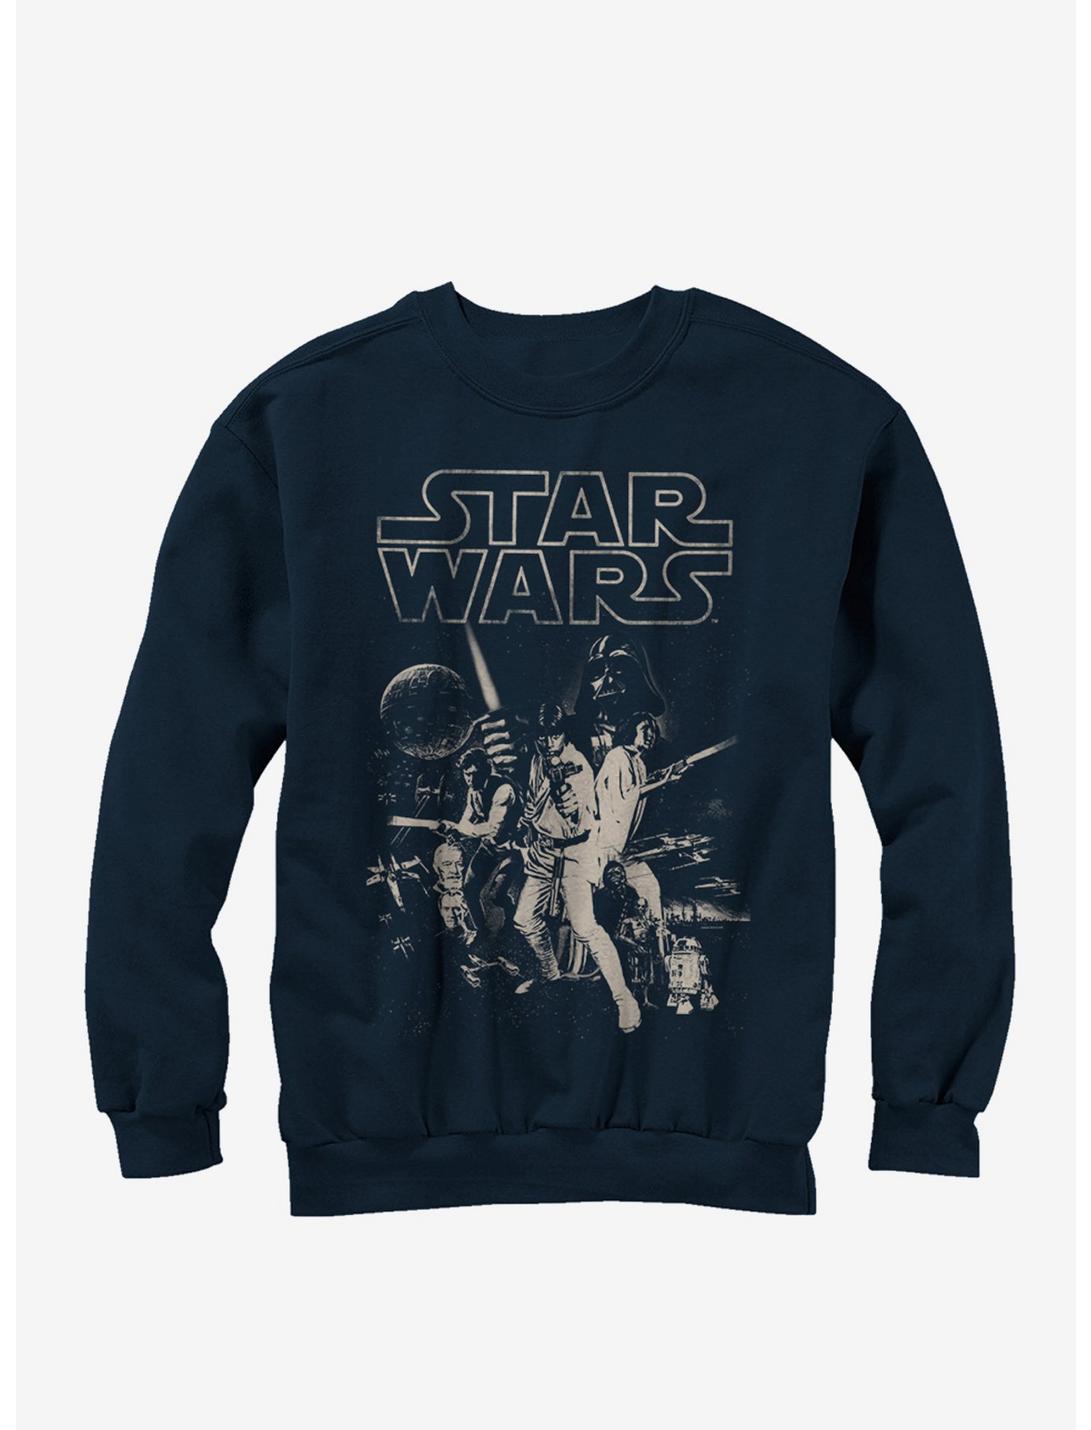 Star Wars Classic Poster Navy Blue Sweatshirt, NAVY, hi-res